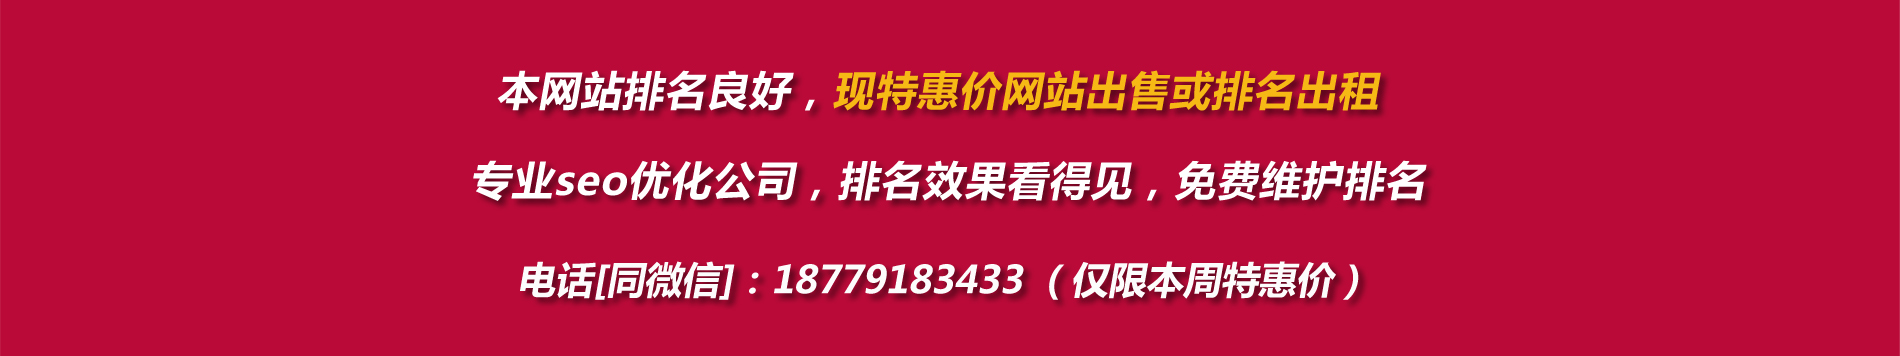 上海公司注册banner